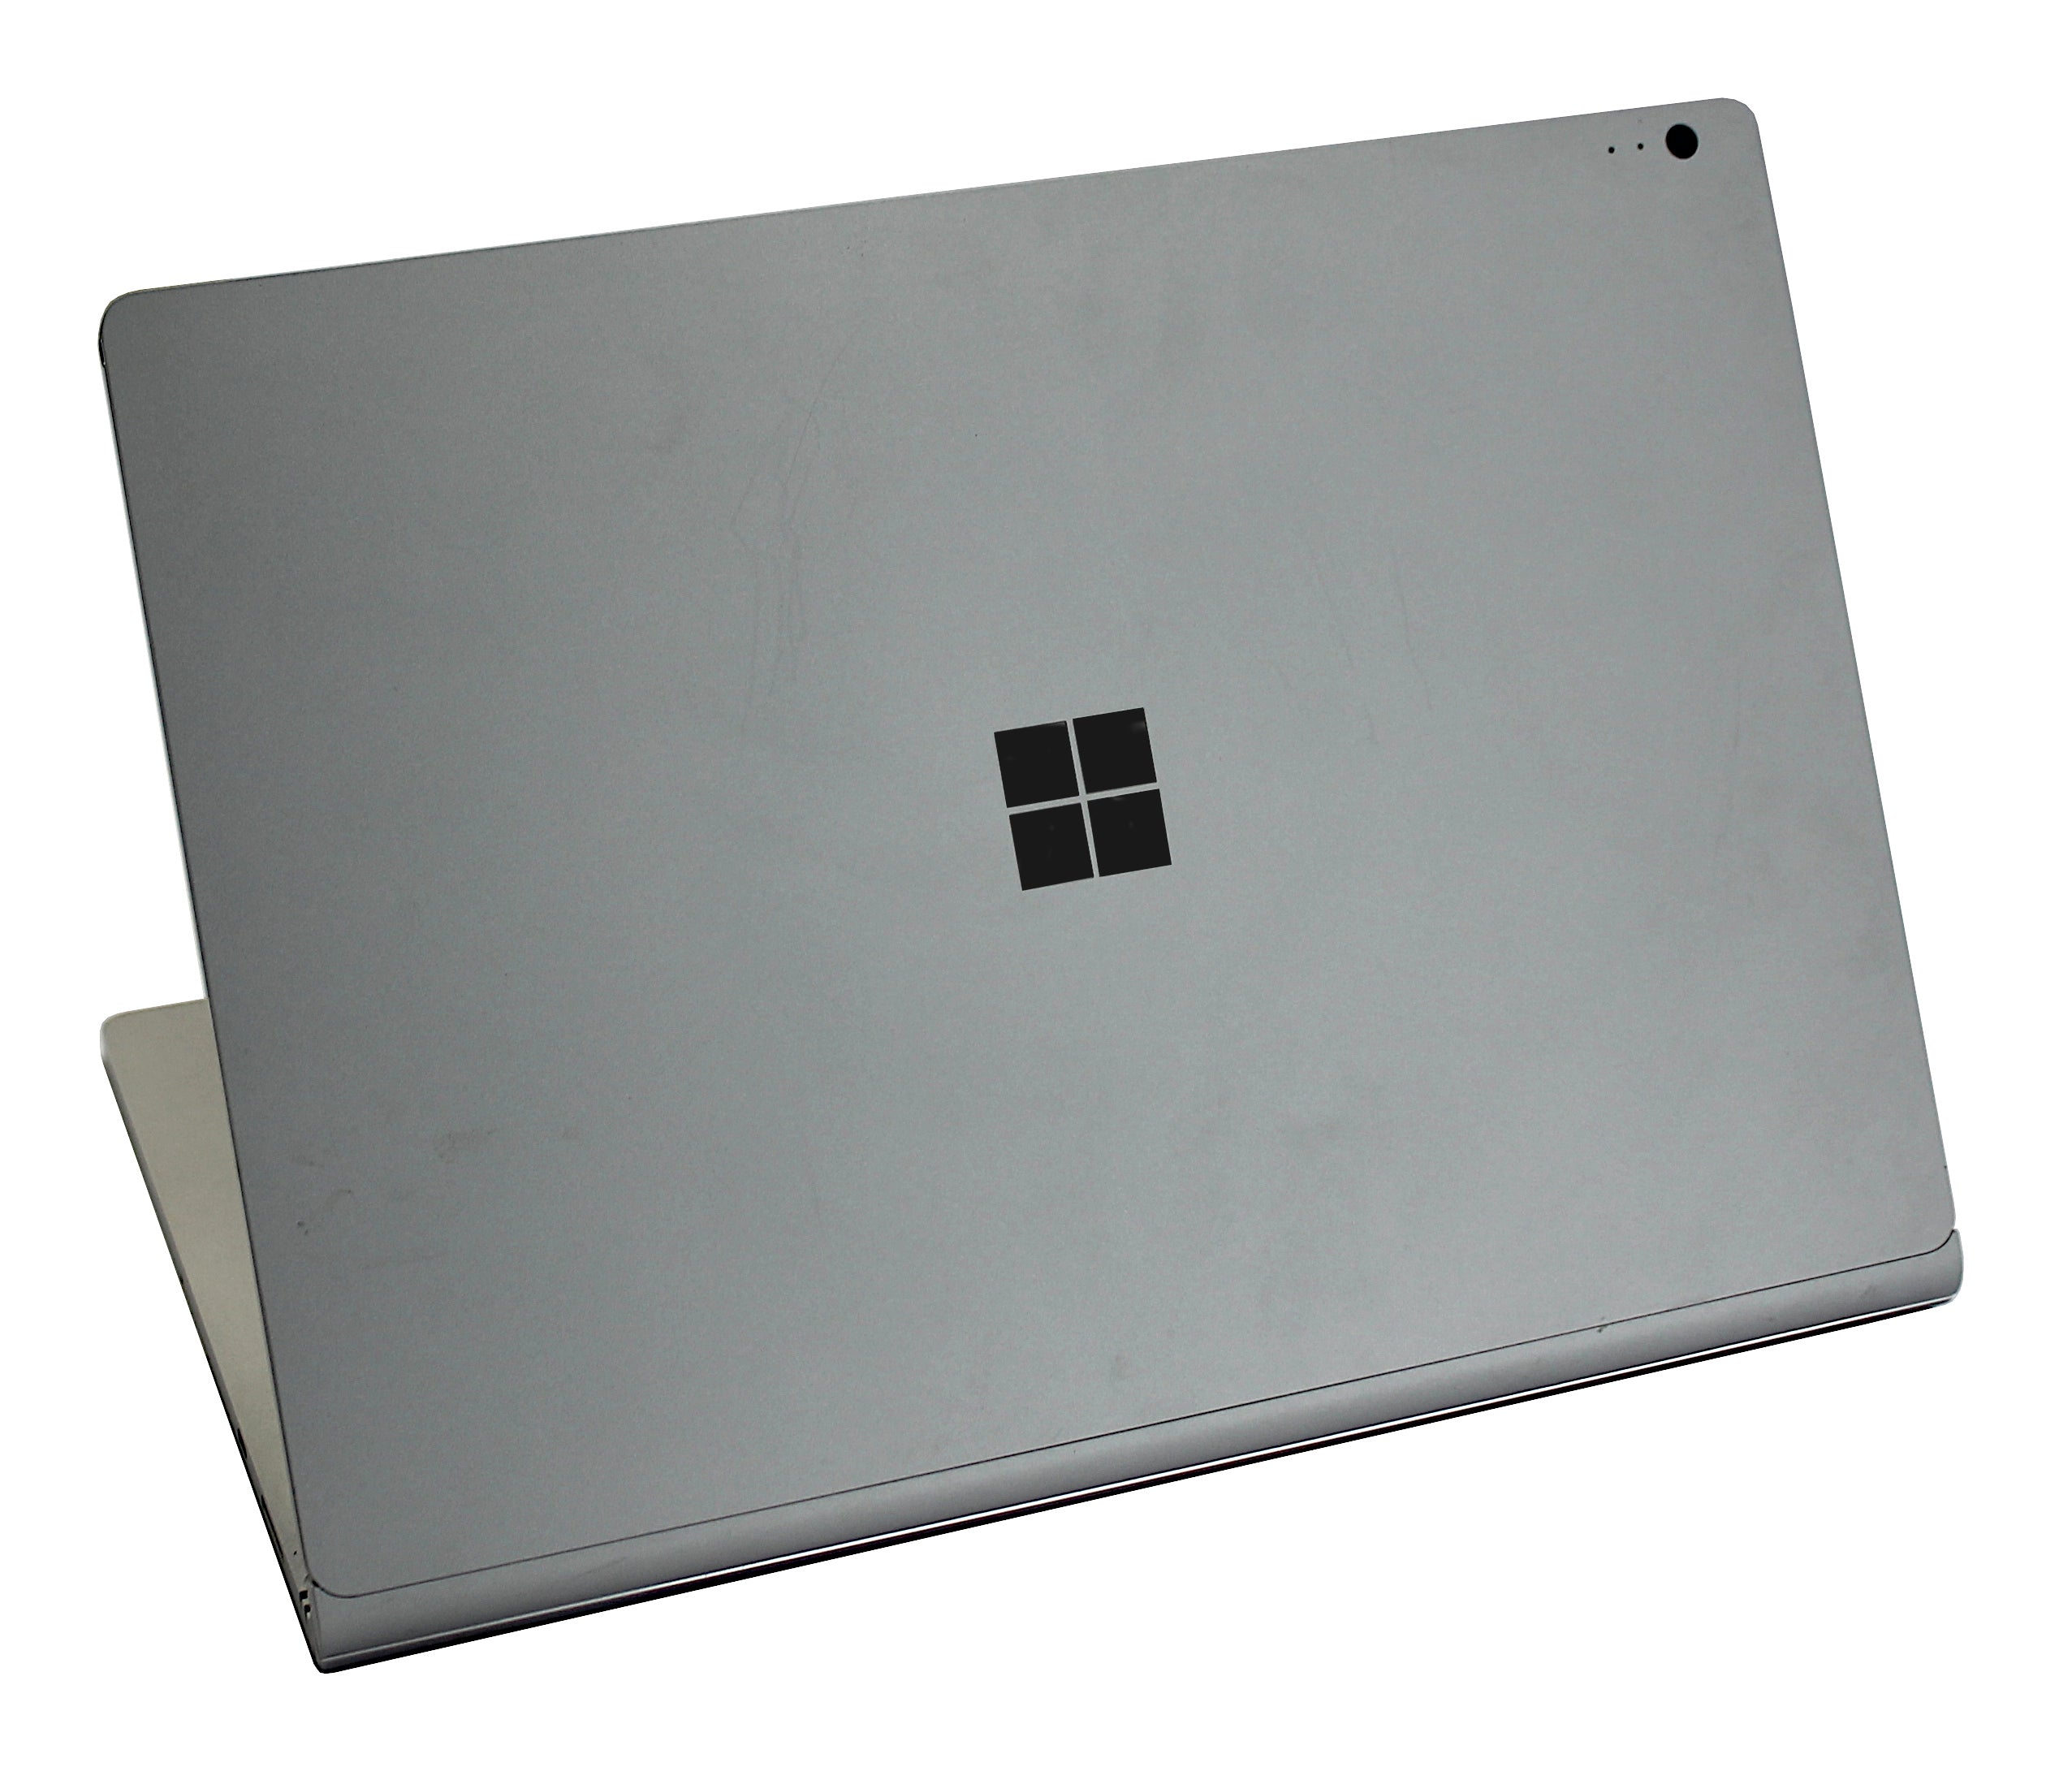 Microsoft Surface Book 2, 13" 8th Gen Core i7, 16GB RAM, 512GB SSD, Windows 10